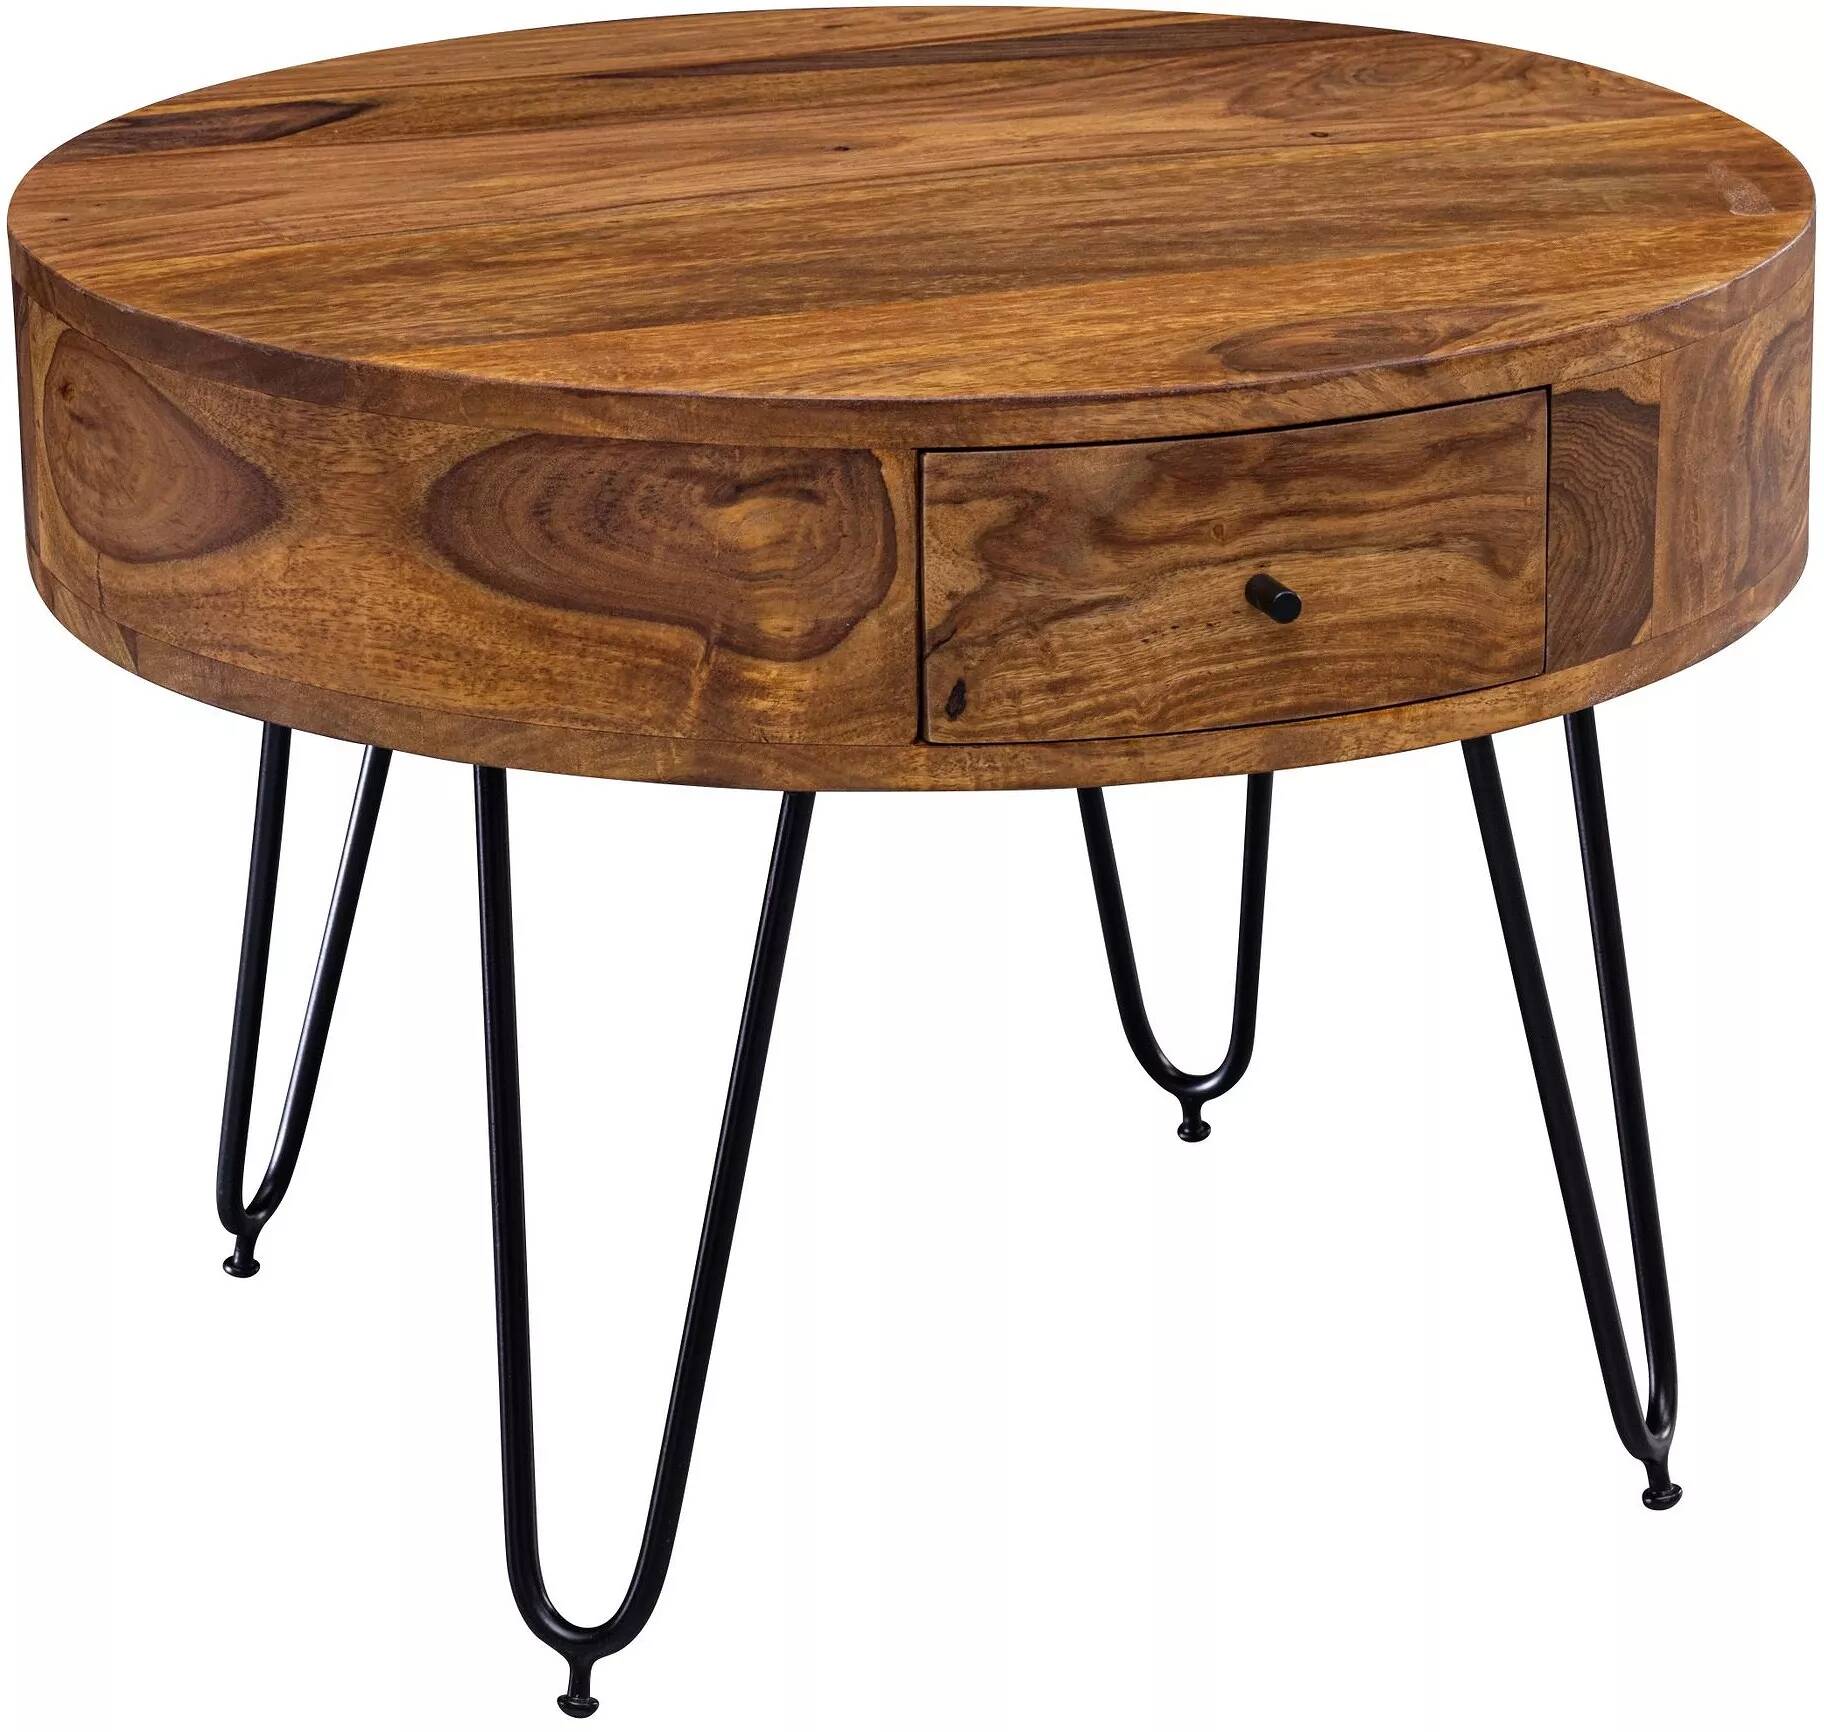 Table basse en bois massif sheesham et acier noir